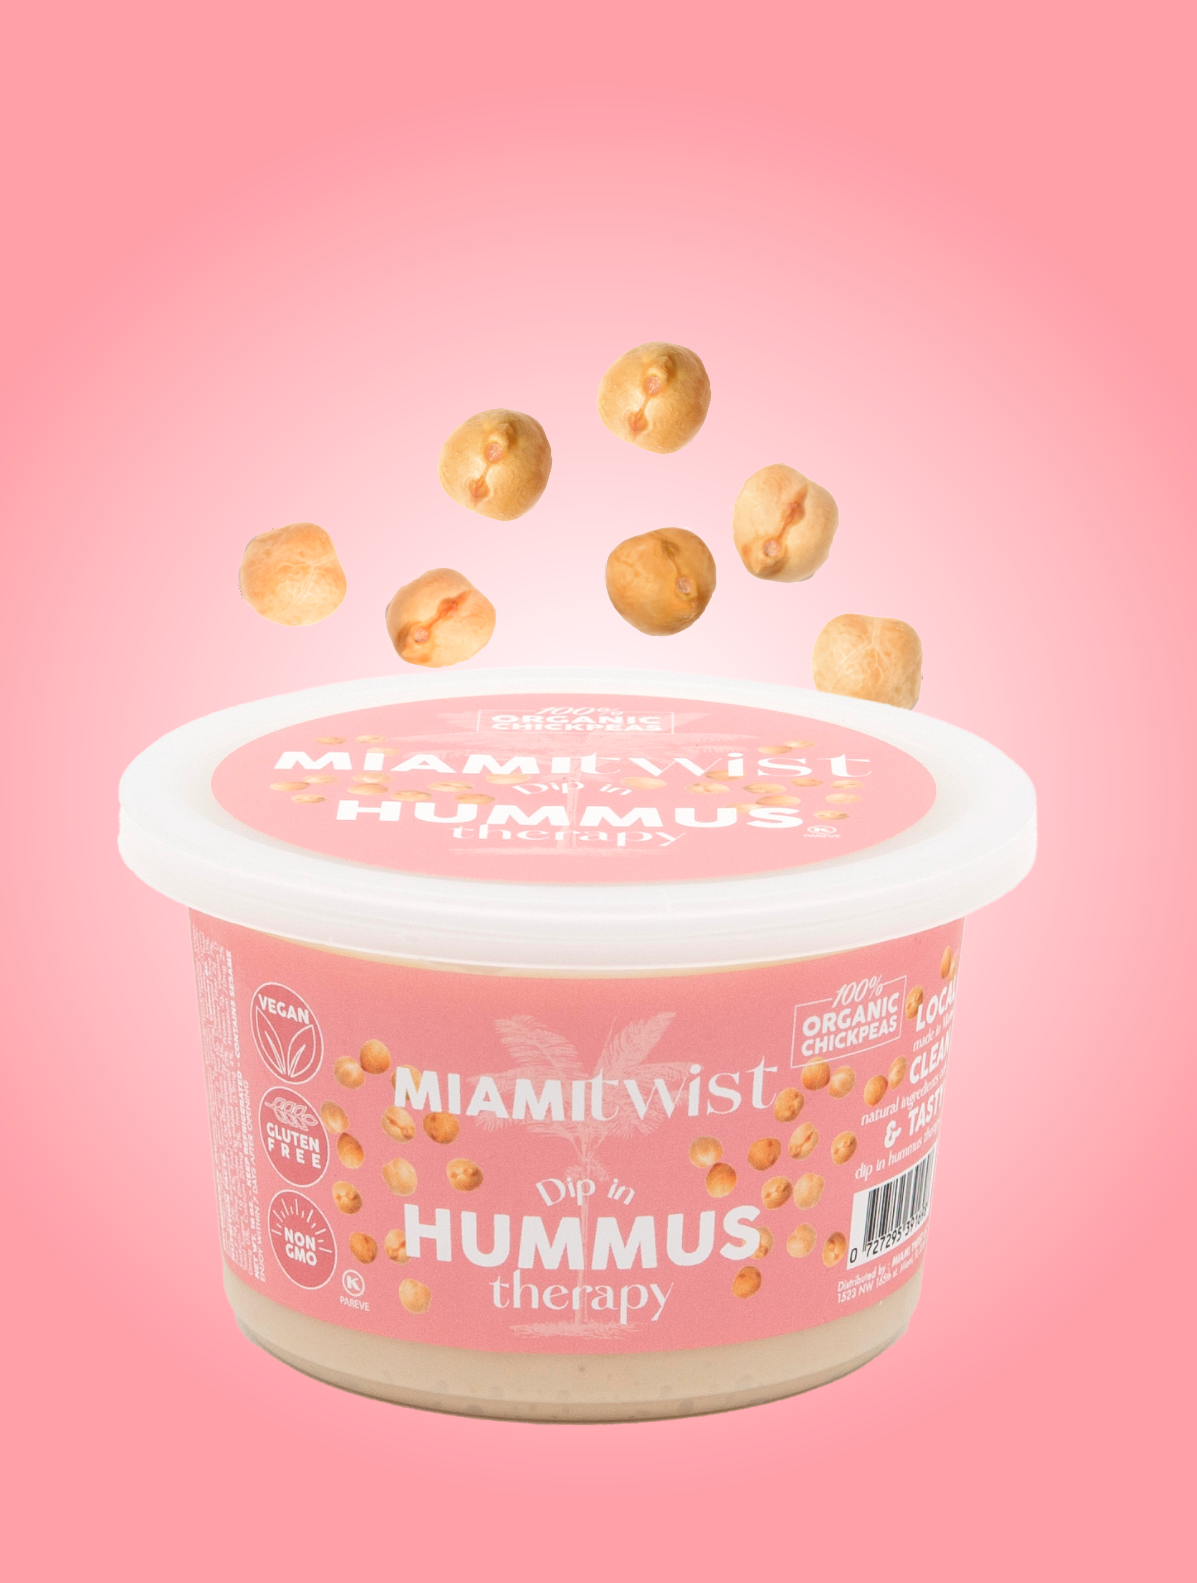 Classic Hummus